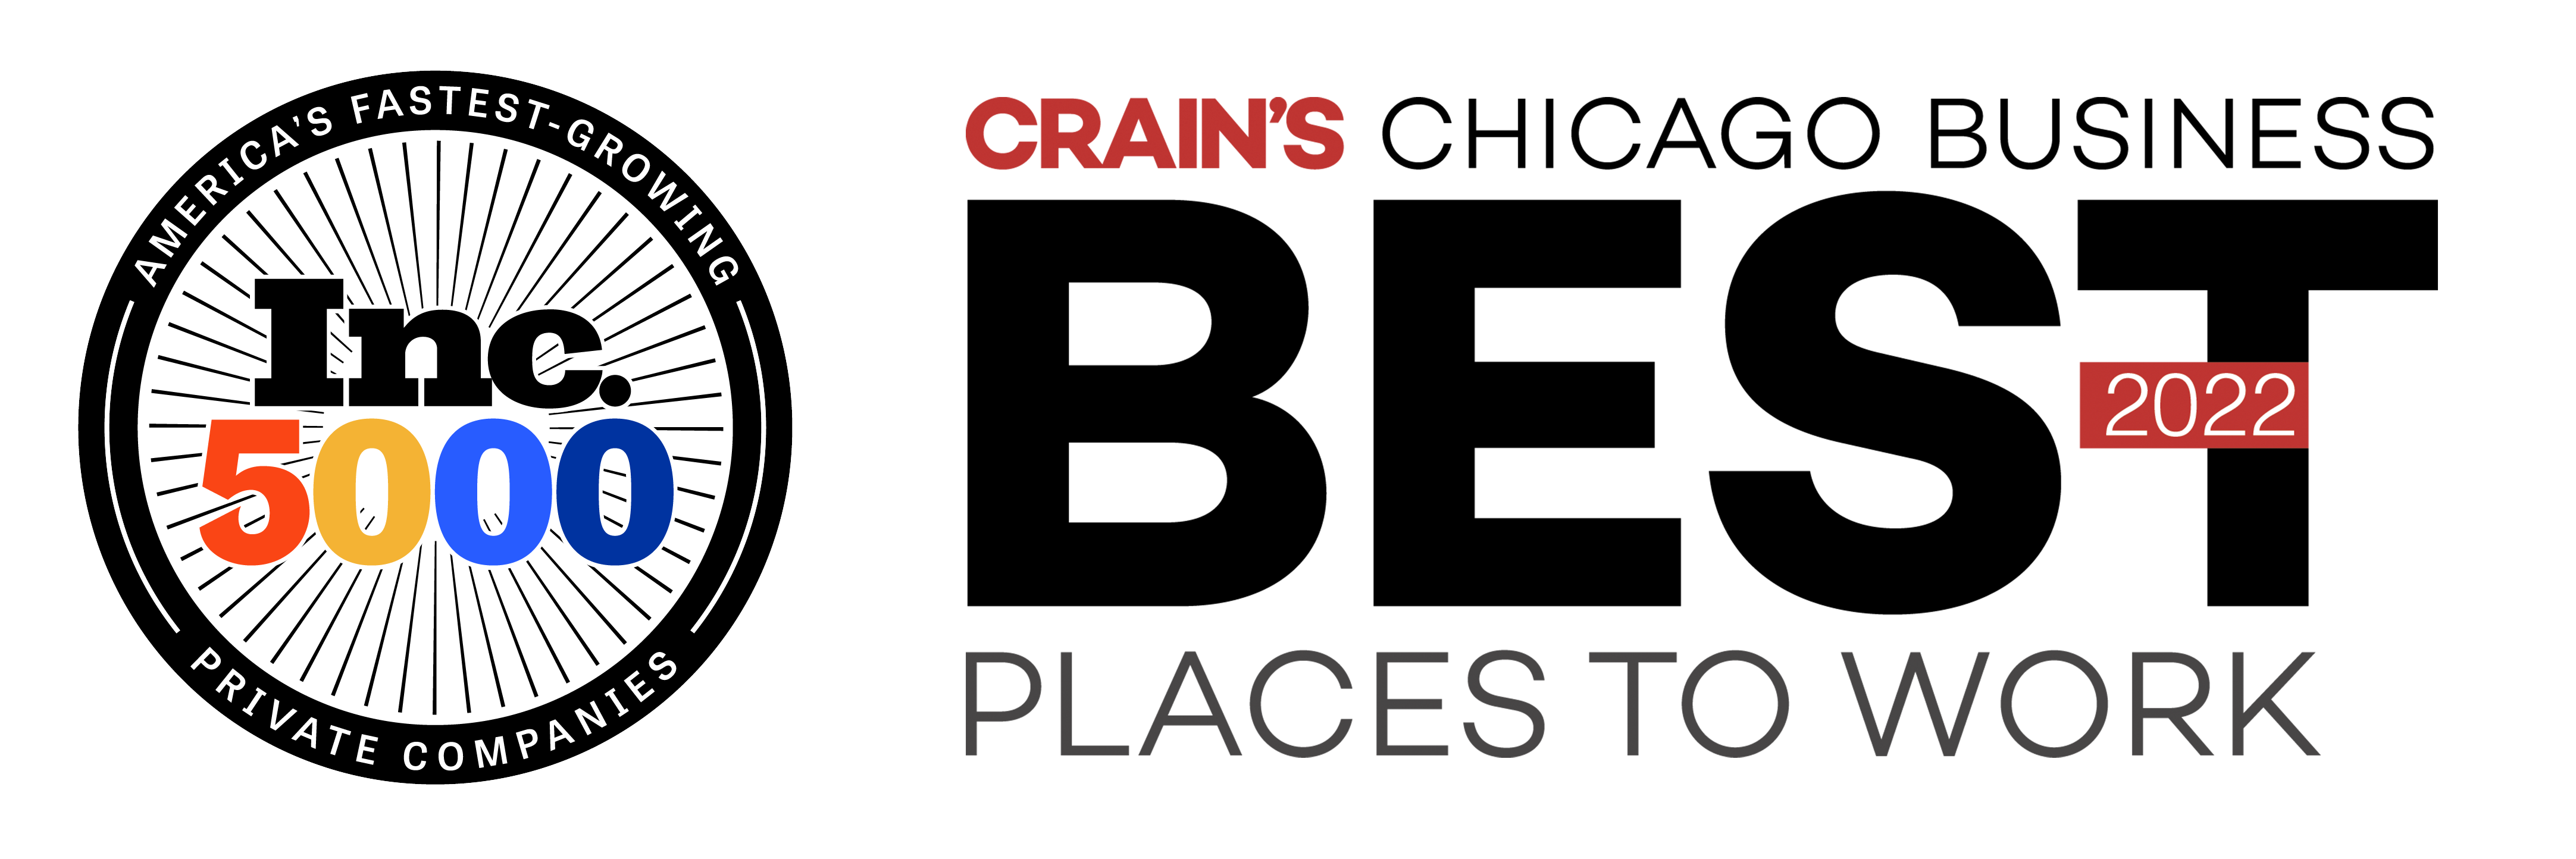 Crains + Inc 5000 (1)